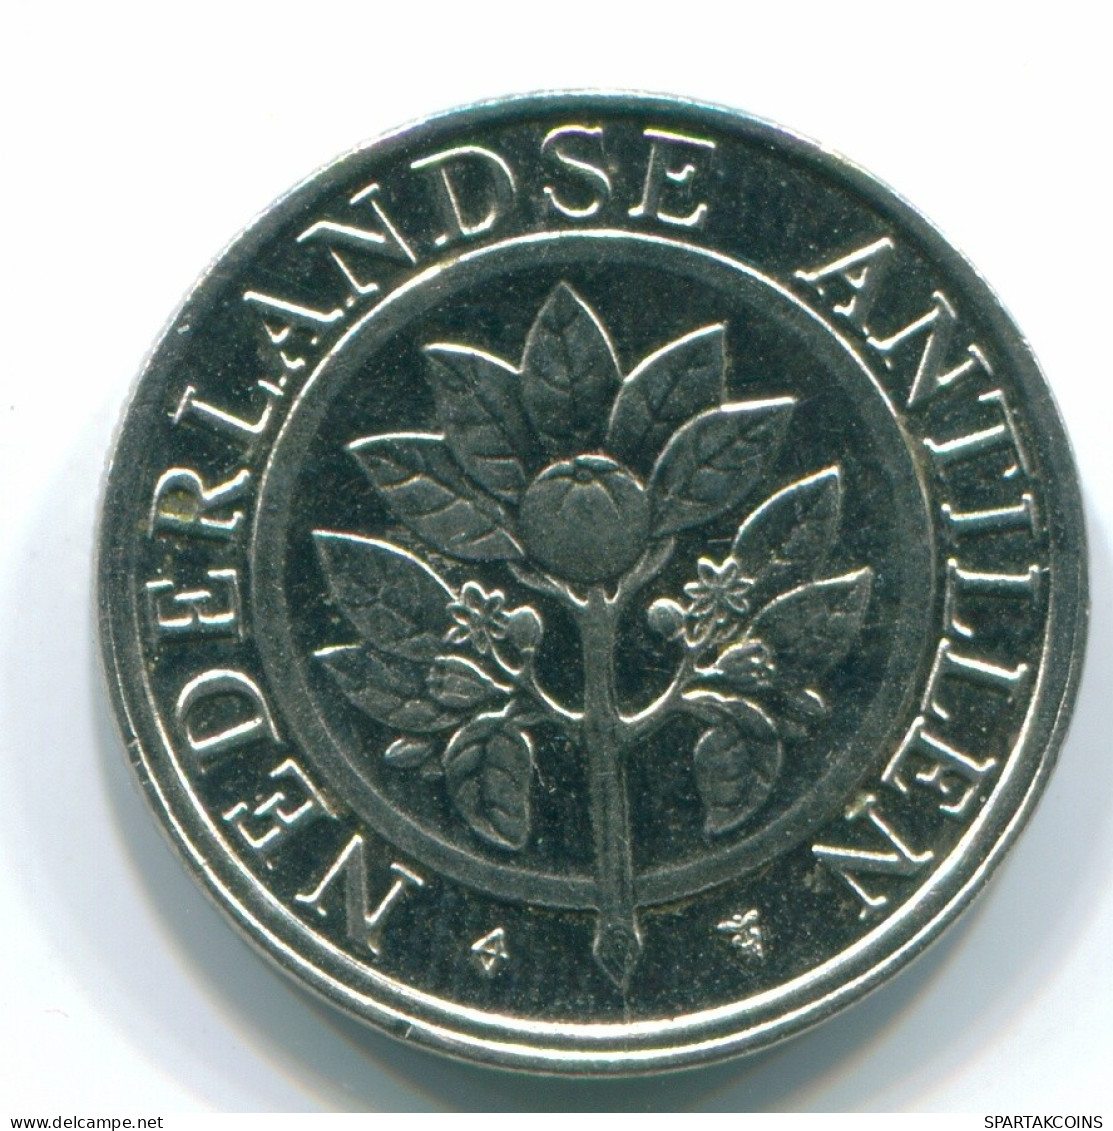 25 CENTS 1990 ANTILLES NÉERLANDAISES Nickel Colonial Pièce #S11266.F.A - Niederländische Antillen